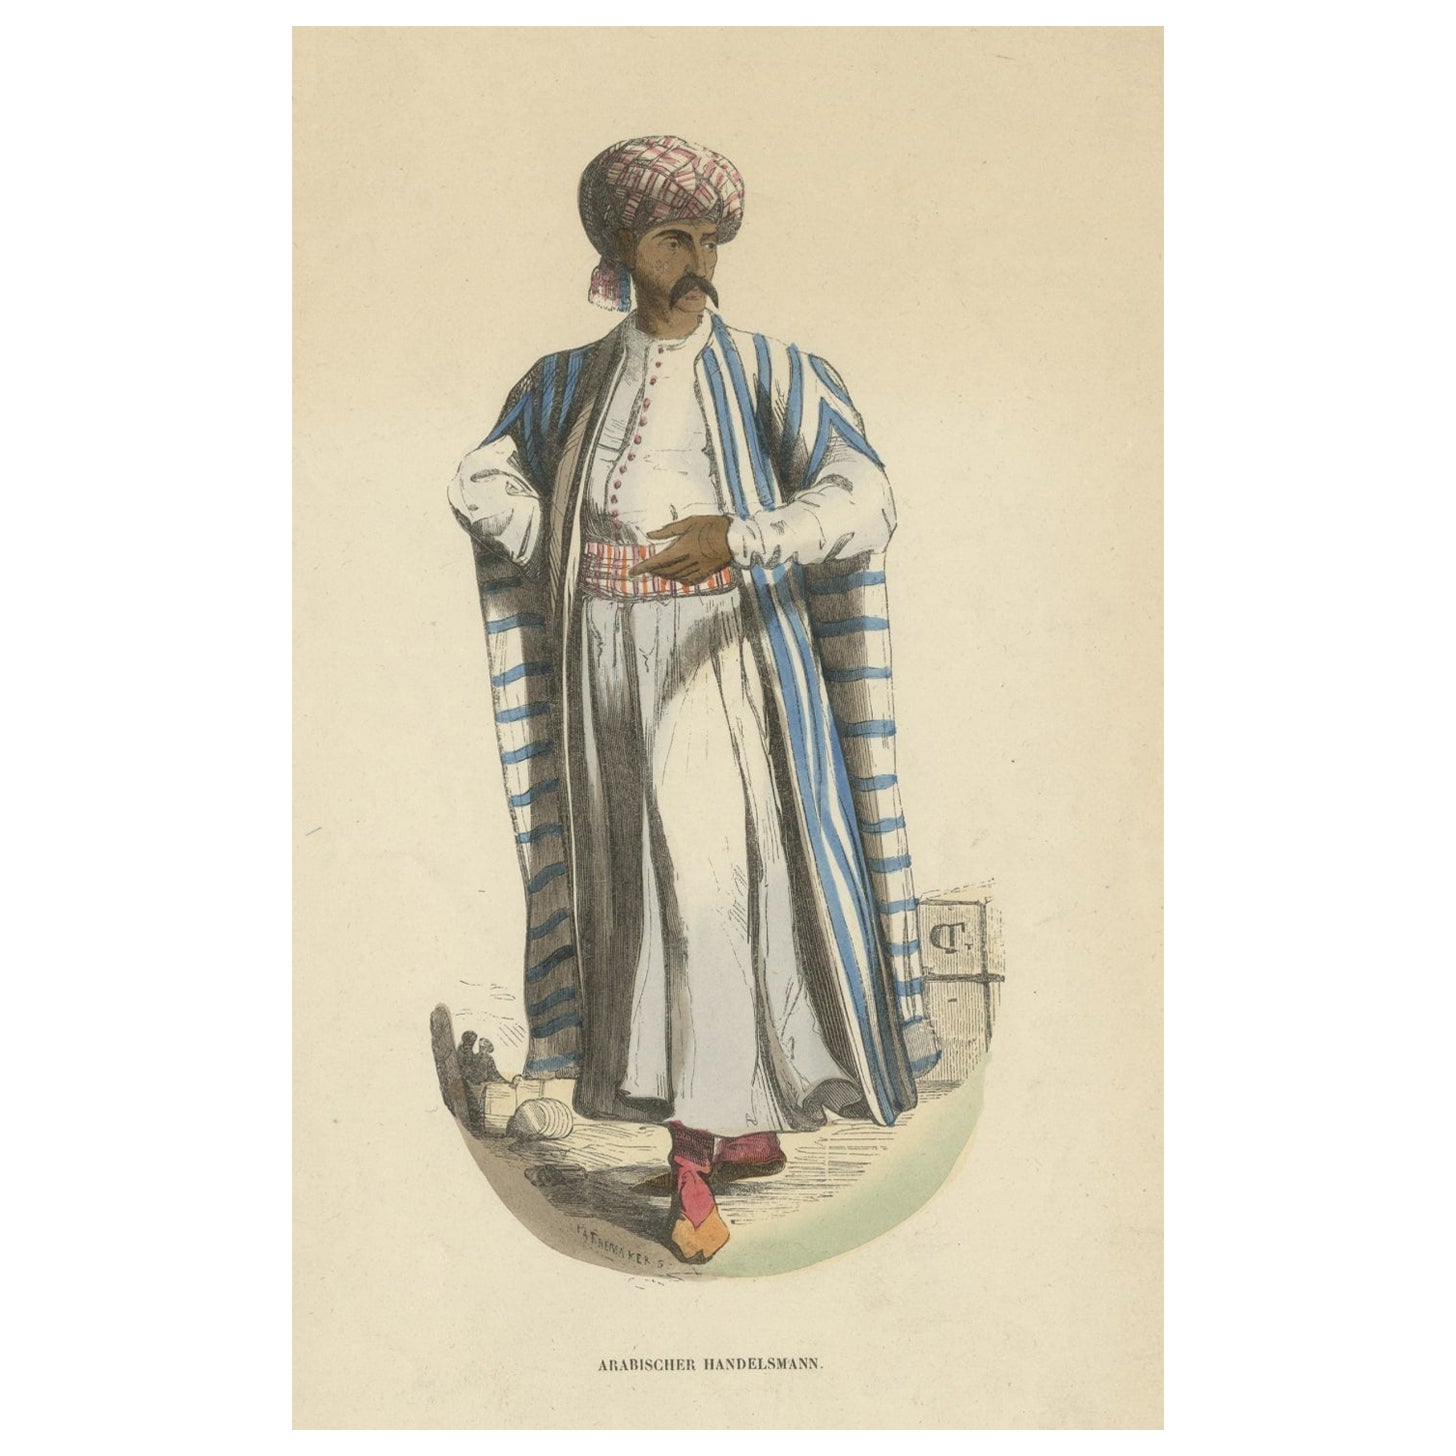 Antique Print of an Arab Merchant in the 19th Century, ca.1845